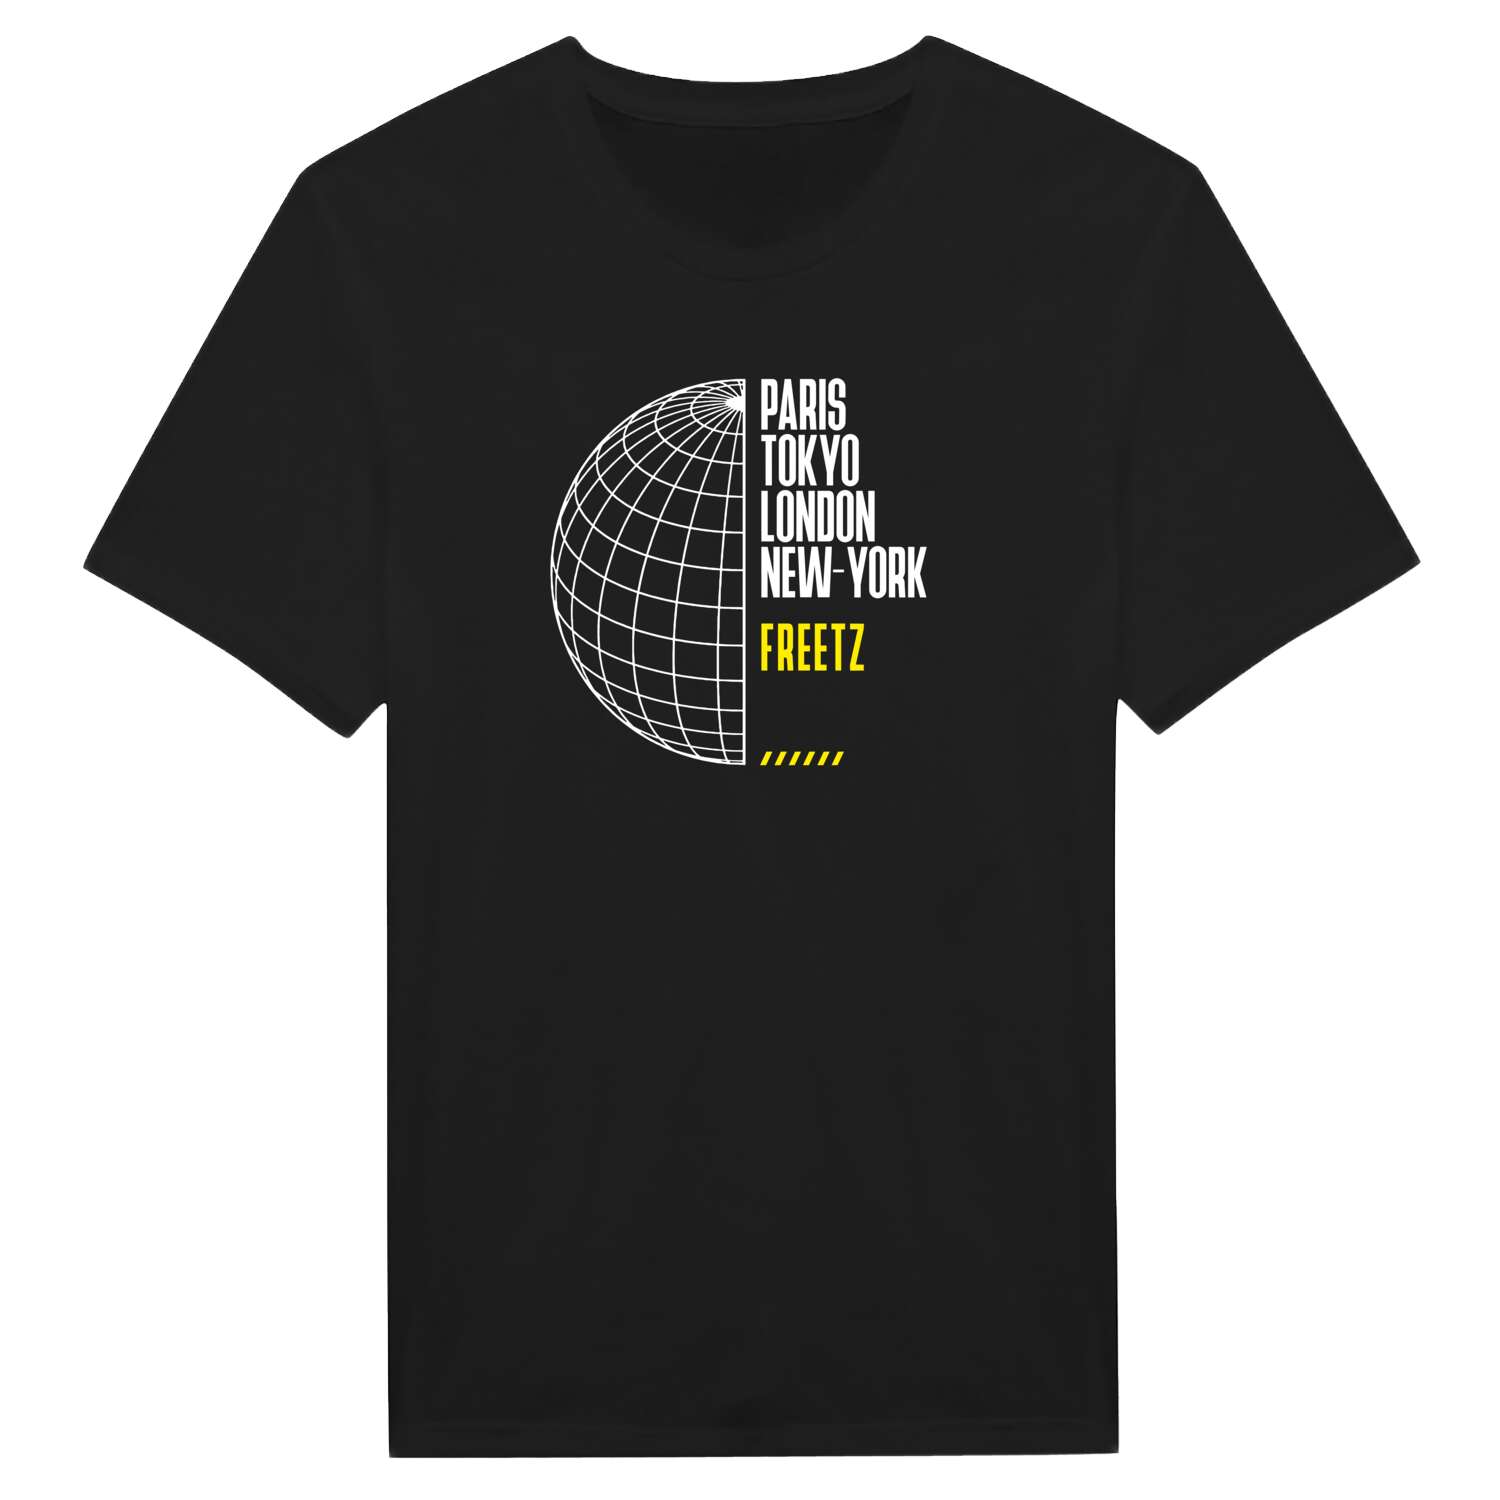 Freetz T-Shirt »Paris Tokyo London«